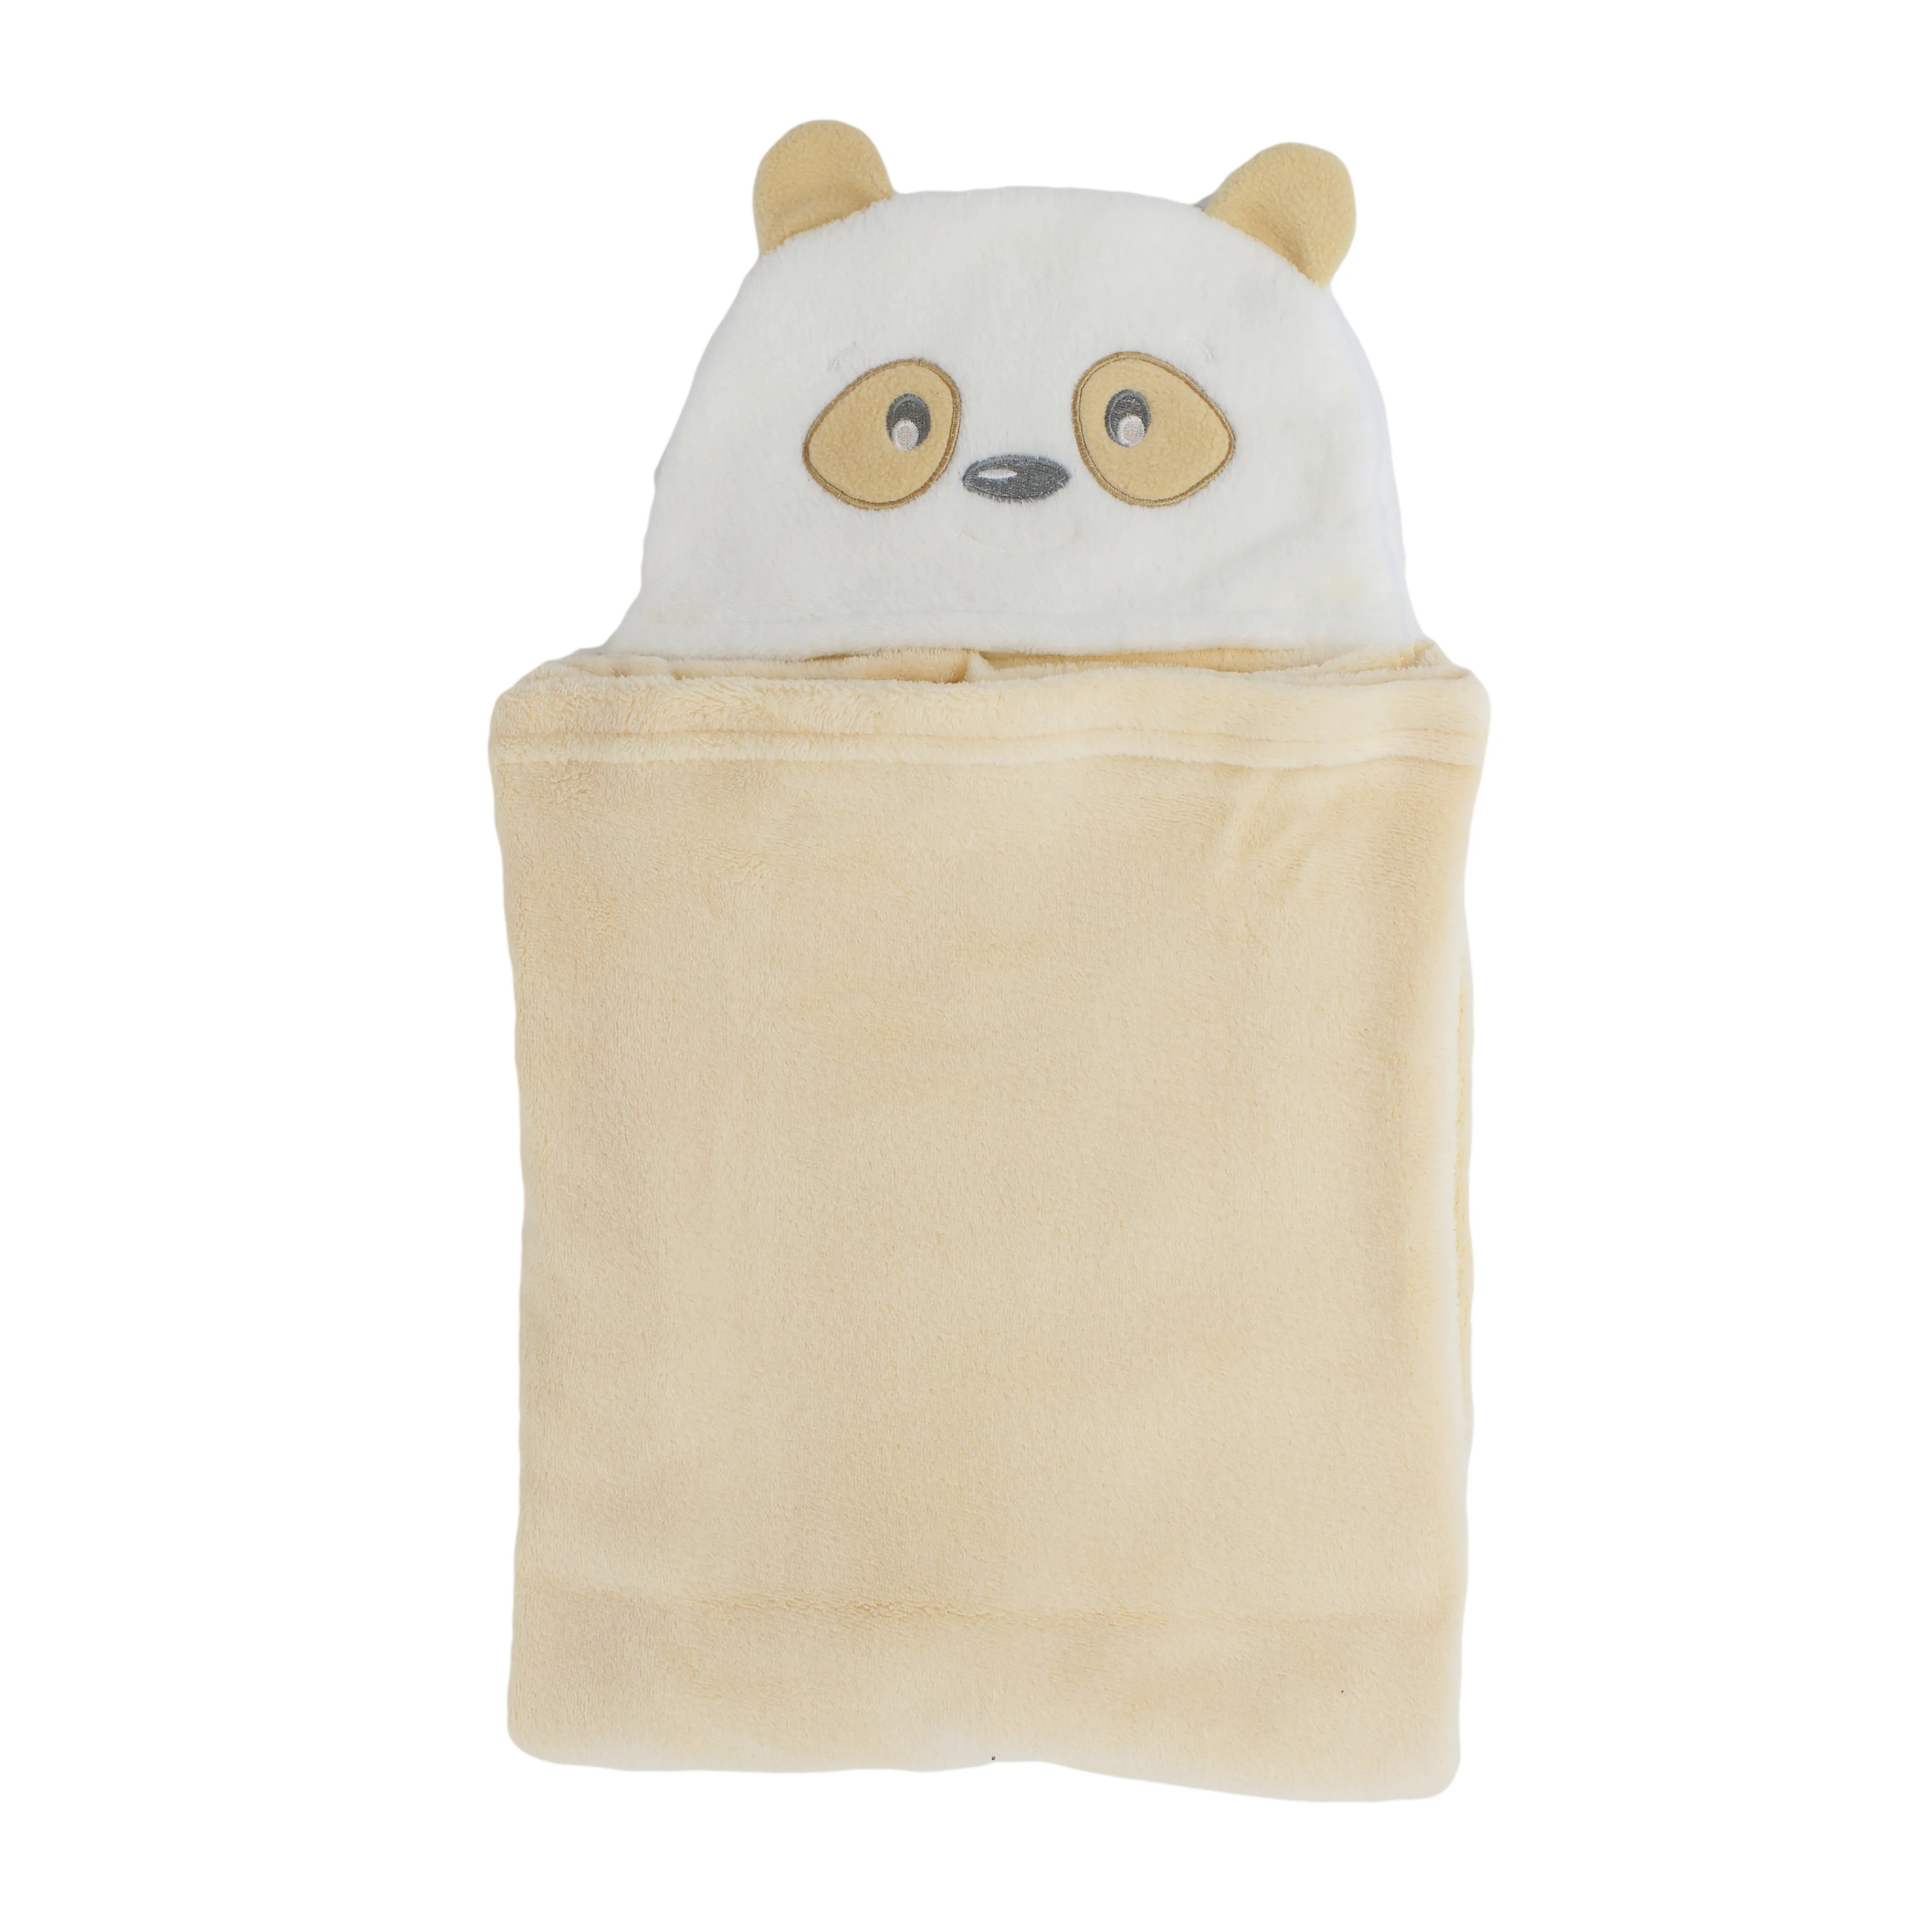 Unisex baby kufala 100% polyester Panda pattern warm windapproved baby hooded blanket